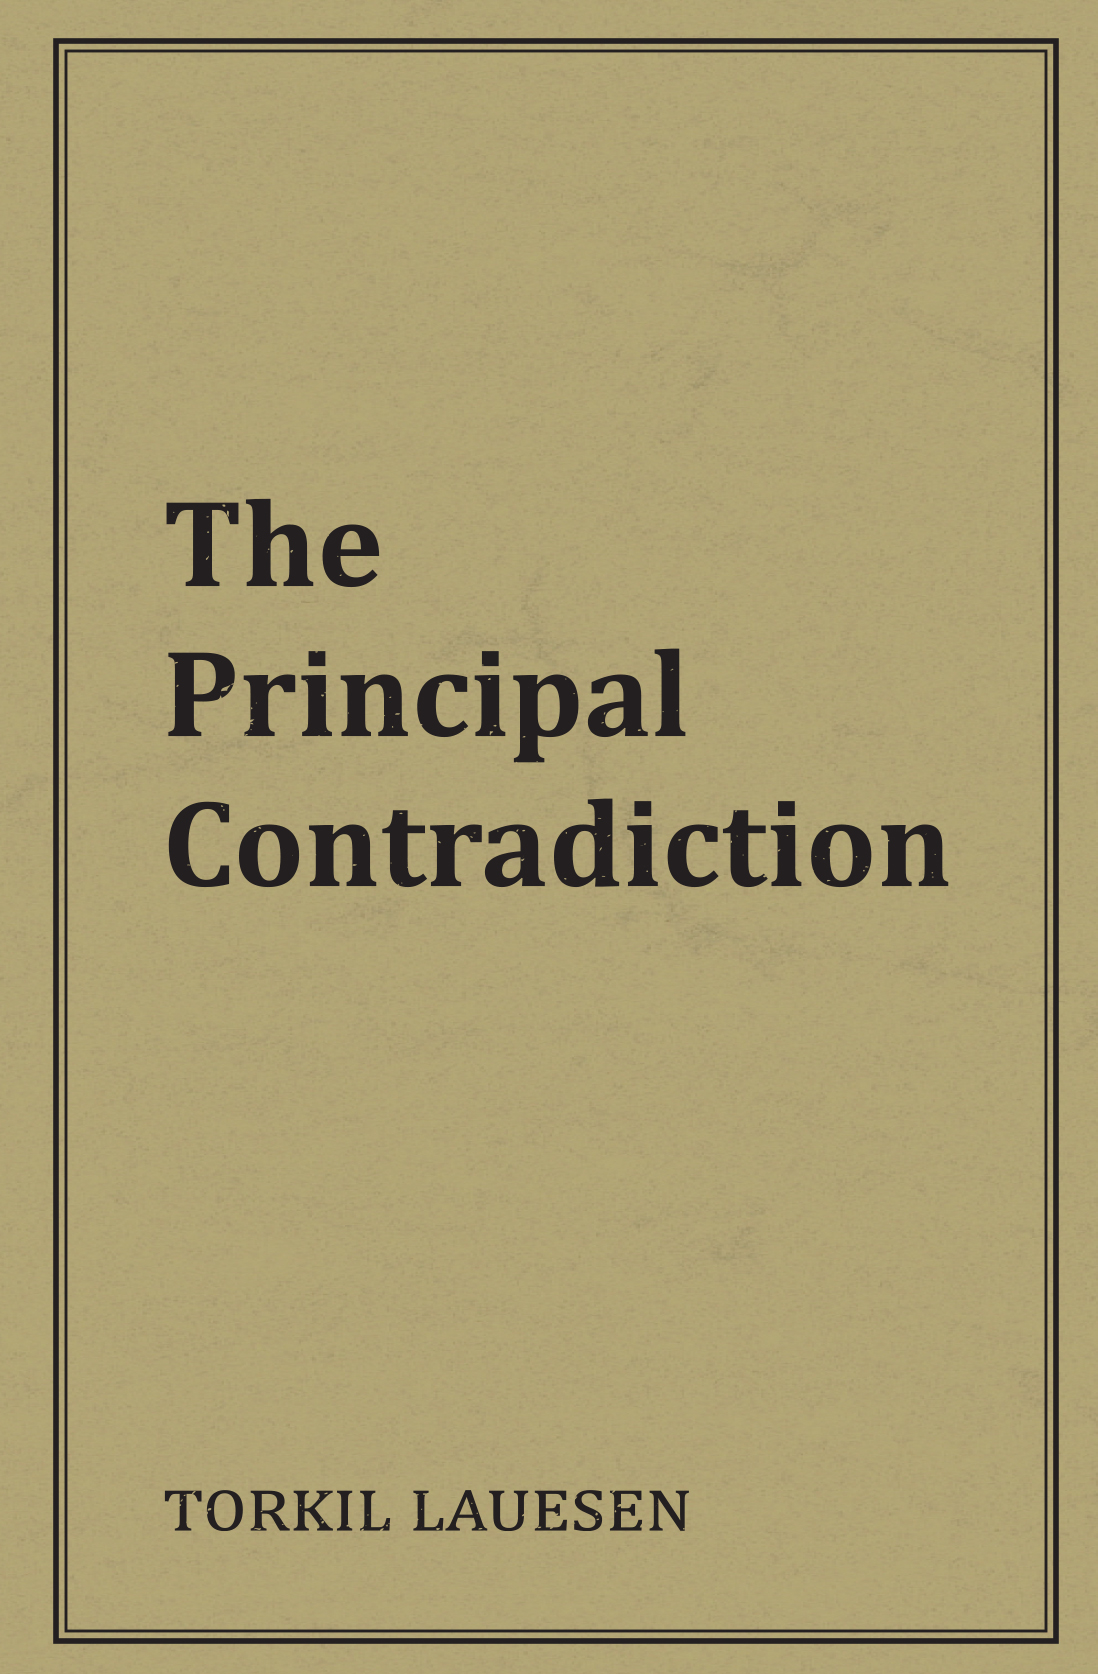 Torkil Lauesen: The Principal Contradiction (Kersplebedeb Publishing)